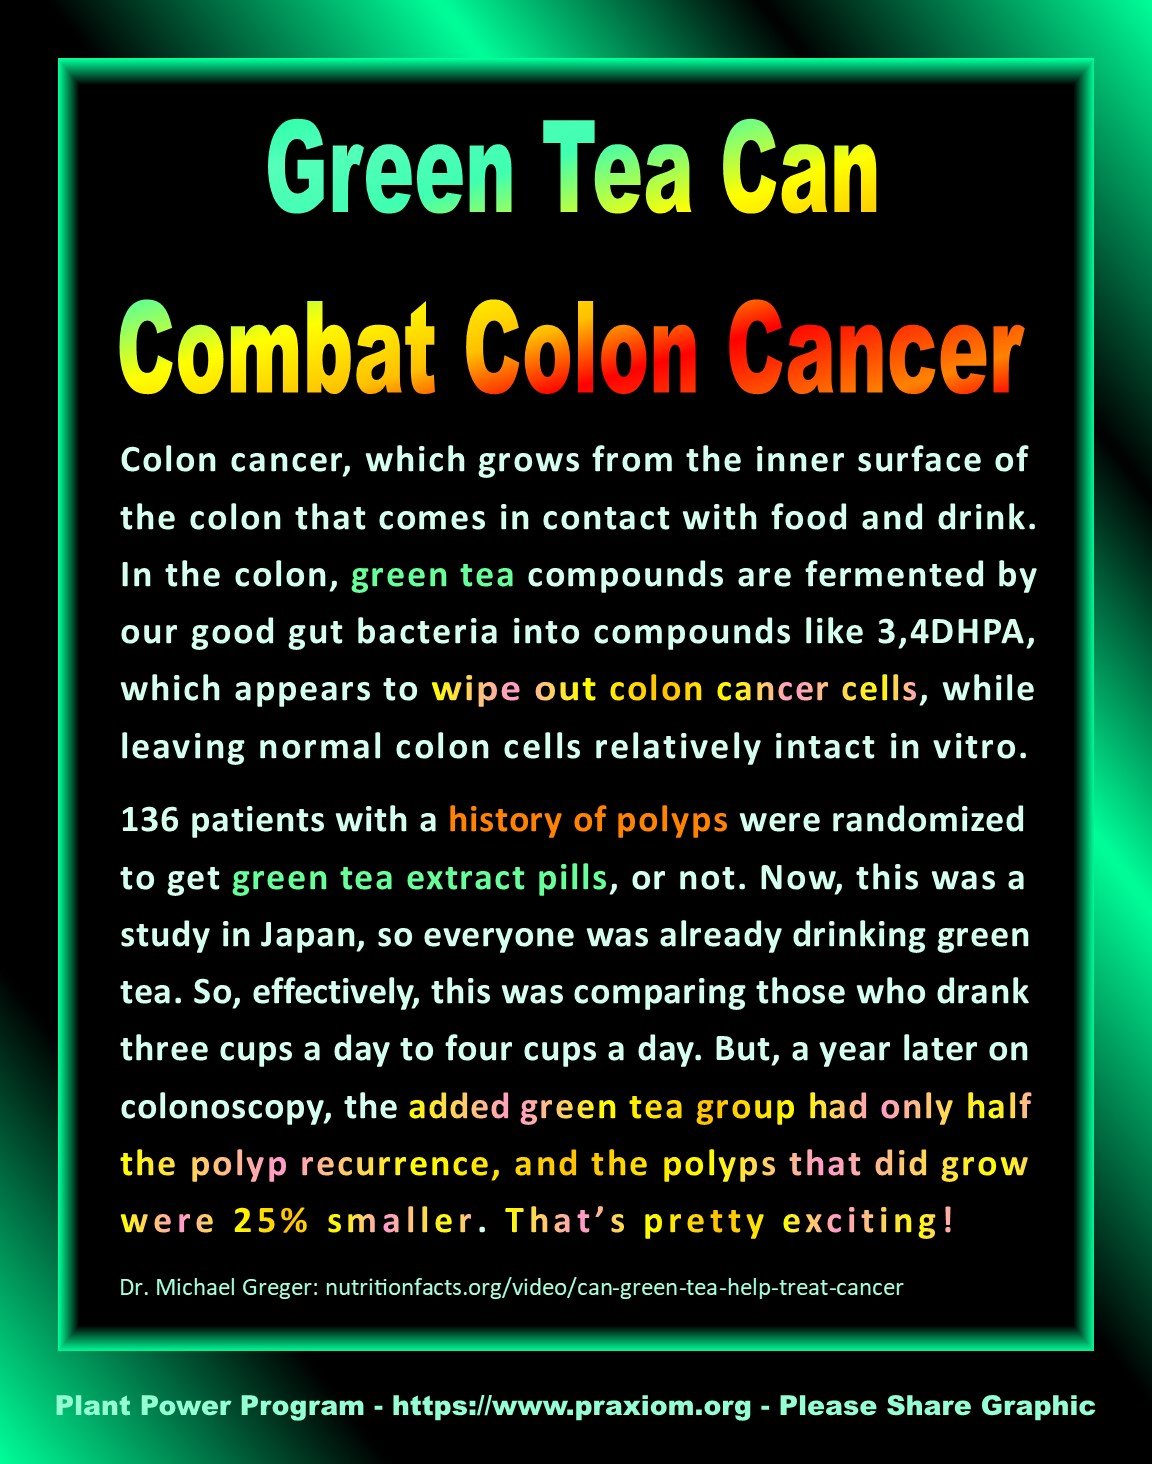 Green Tea Fights Colon Cancer - Dr. Michael Greger